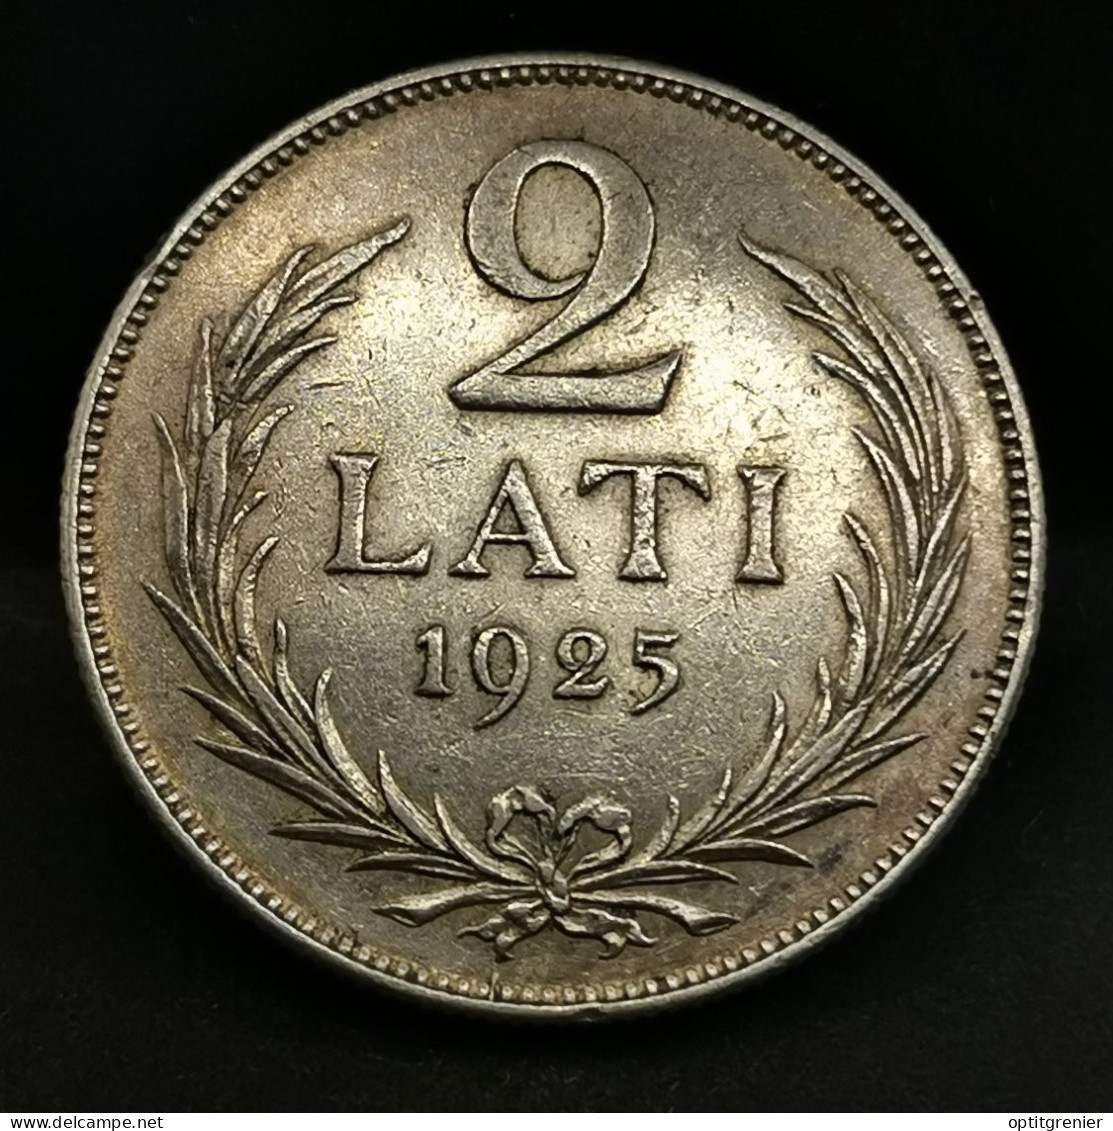 2 LATI 1925 ARGENT LETTONIE / SILVER - Lettland